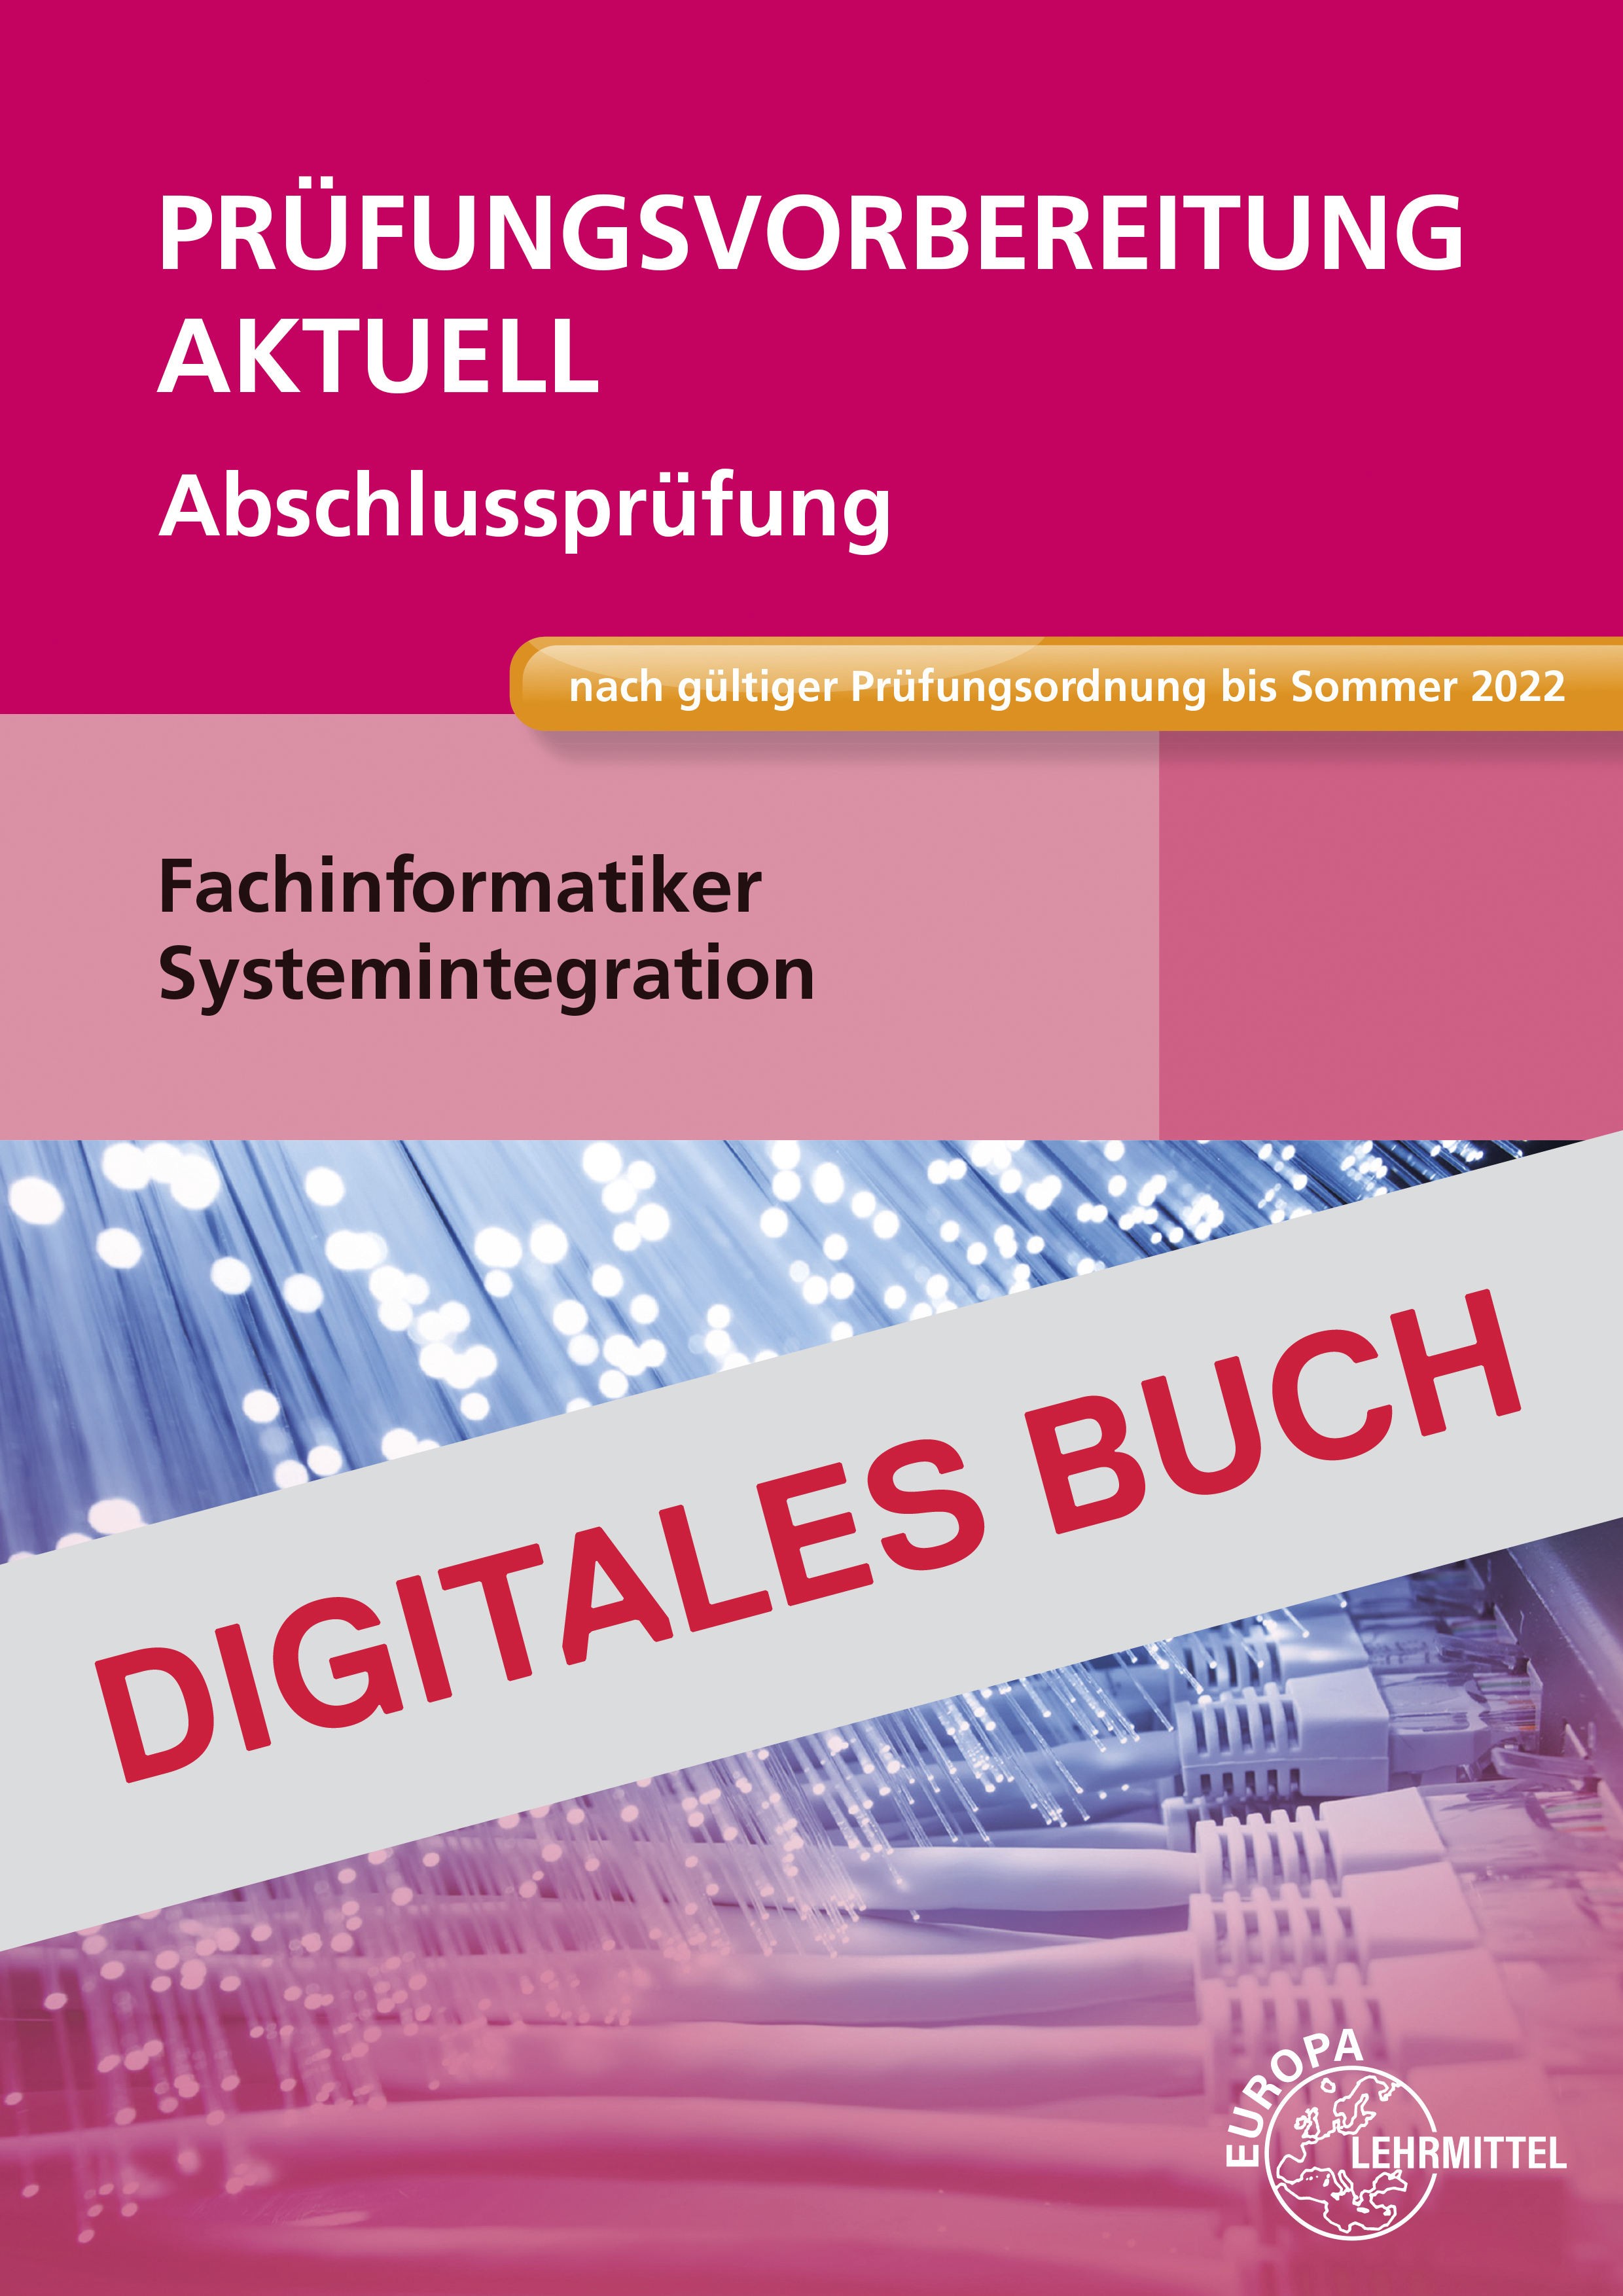 Prüfungsvorbereitung aktuell Fachinformatiker Systemintegration - Digitales Buch